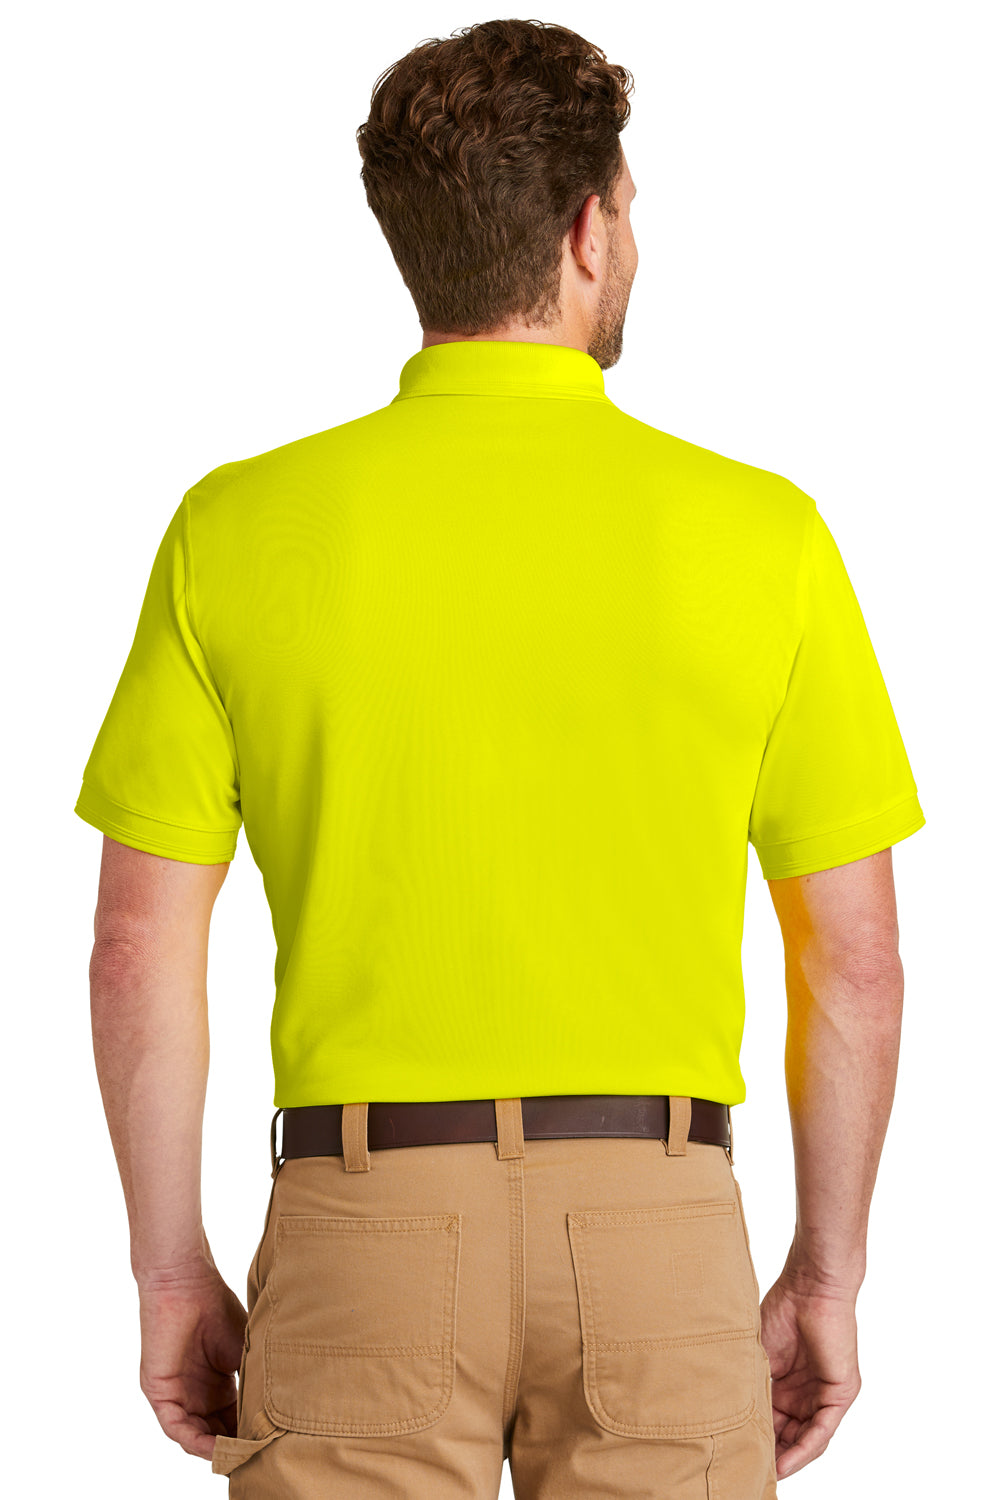 CornerStone CS4020P Mens Industrial Moisture Wicking Short Sleeve Polo Shirt w/ Pocket Safety Yellow Back